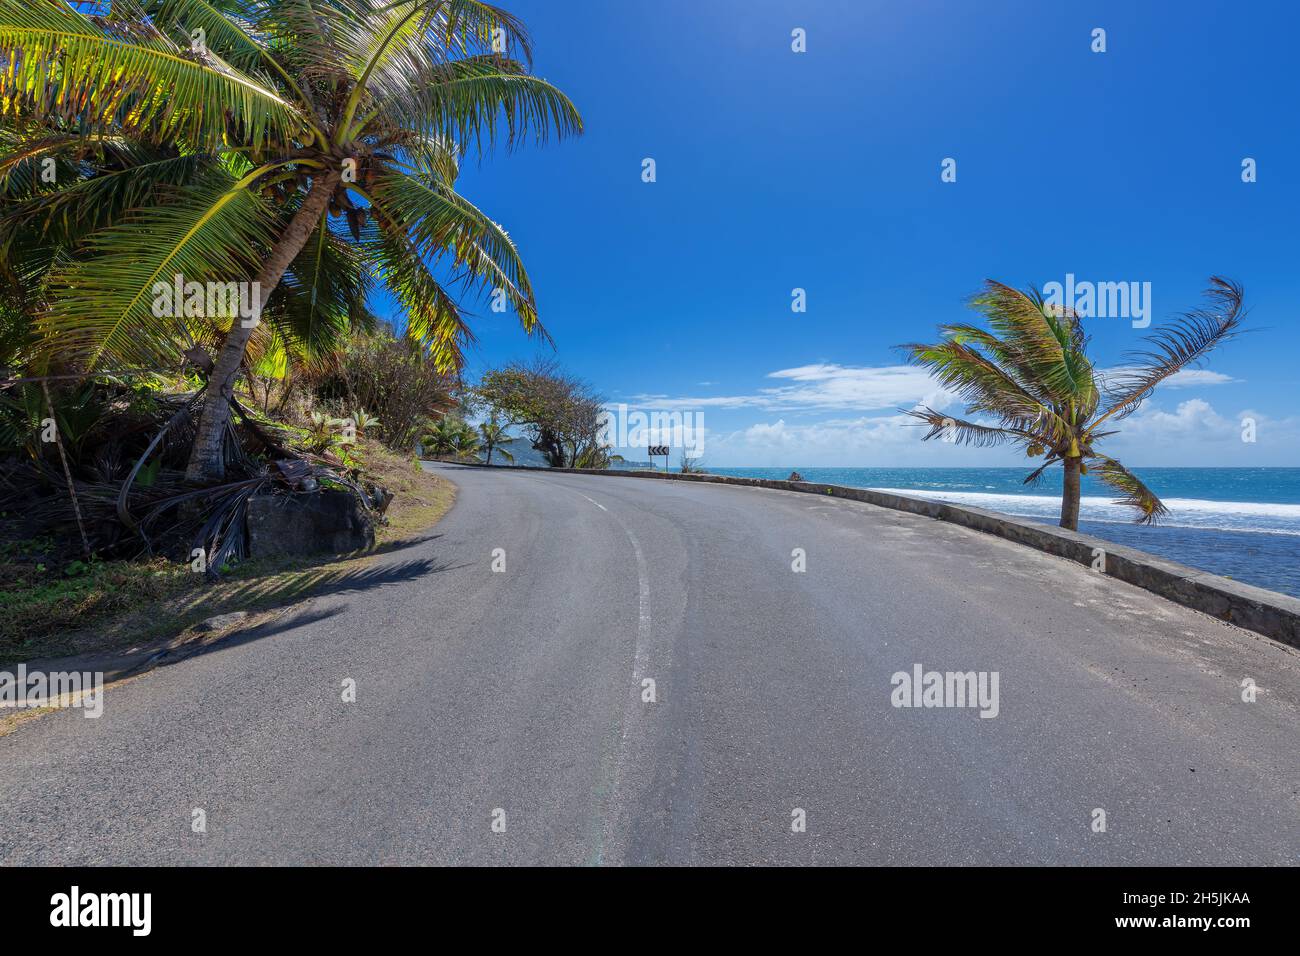 Beach road in tropical island Stock Photo